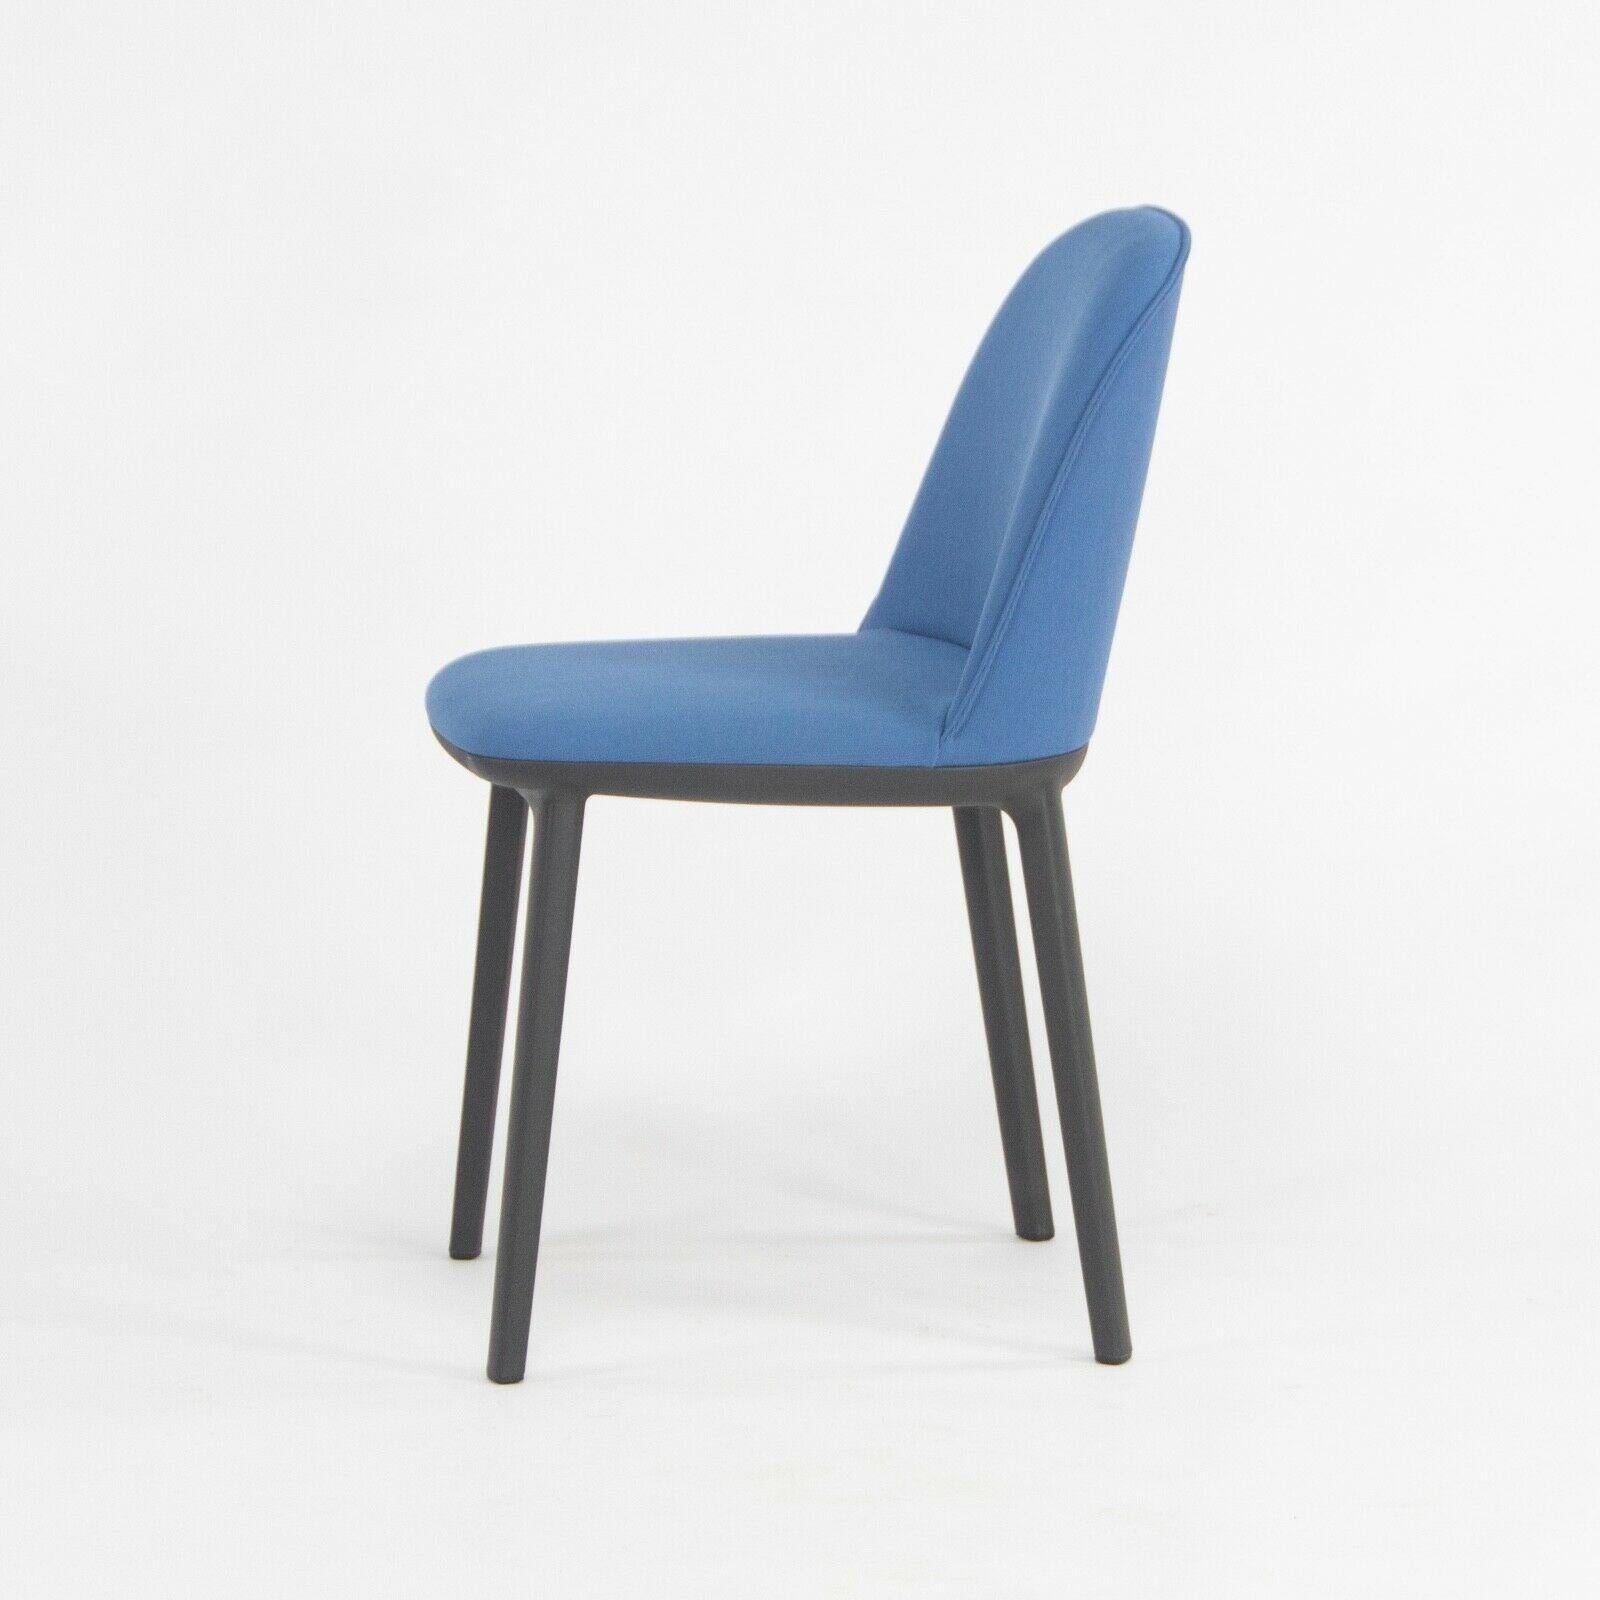 Swiss 2019 Vitra Softshell Side Chair w/ Light Blue Fabric by Ronan & Erwan Bouroullec For Sale